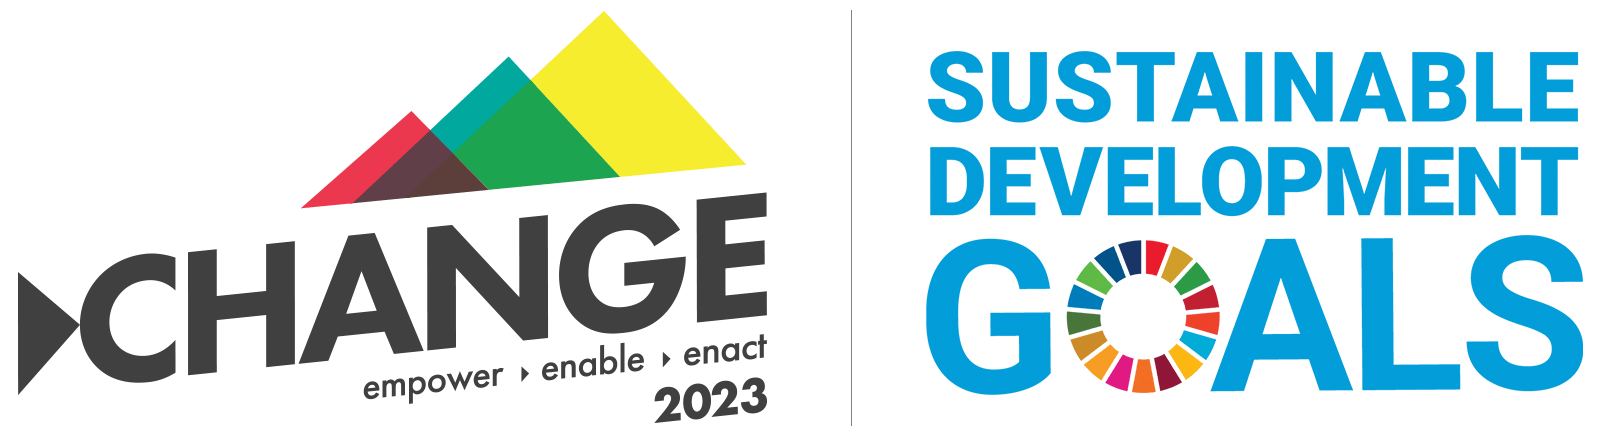 Change 2023 conference logo along side the UN's sustainable development goals logo